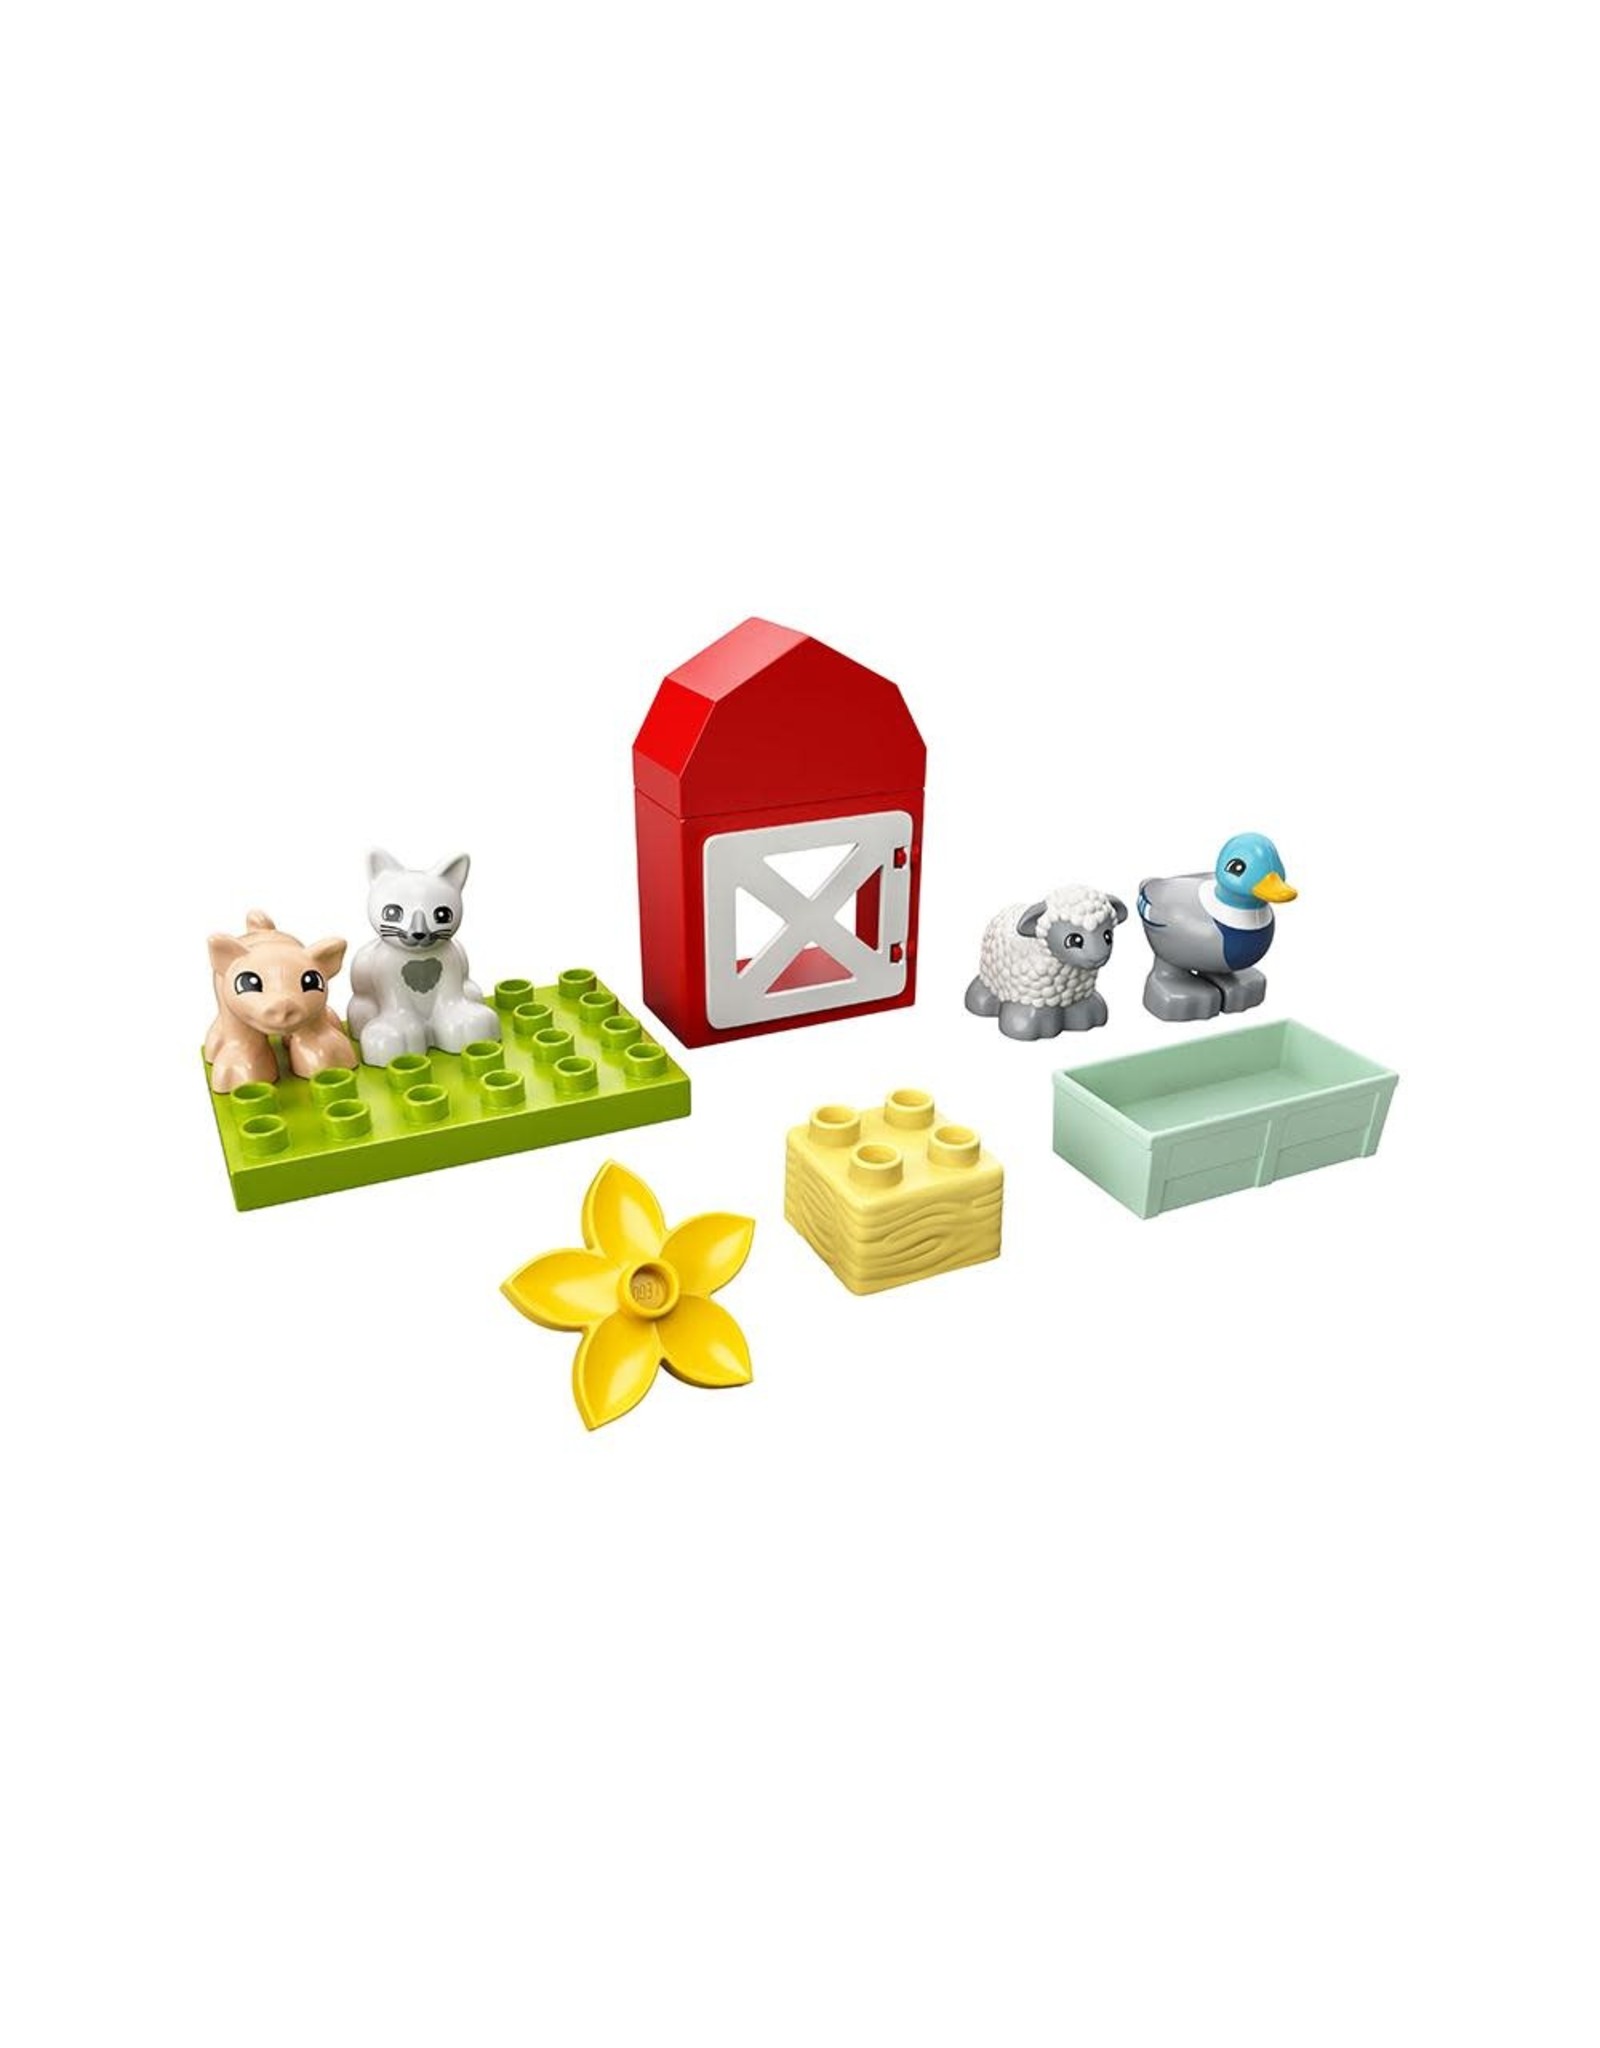 LEGO Duplo 10949 Farm Animal Care